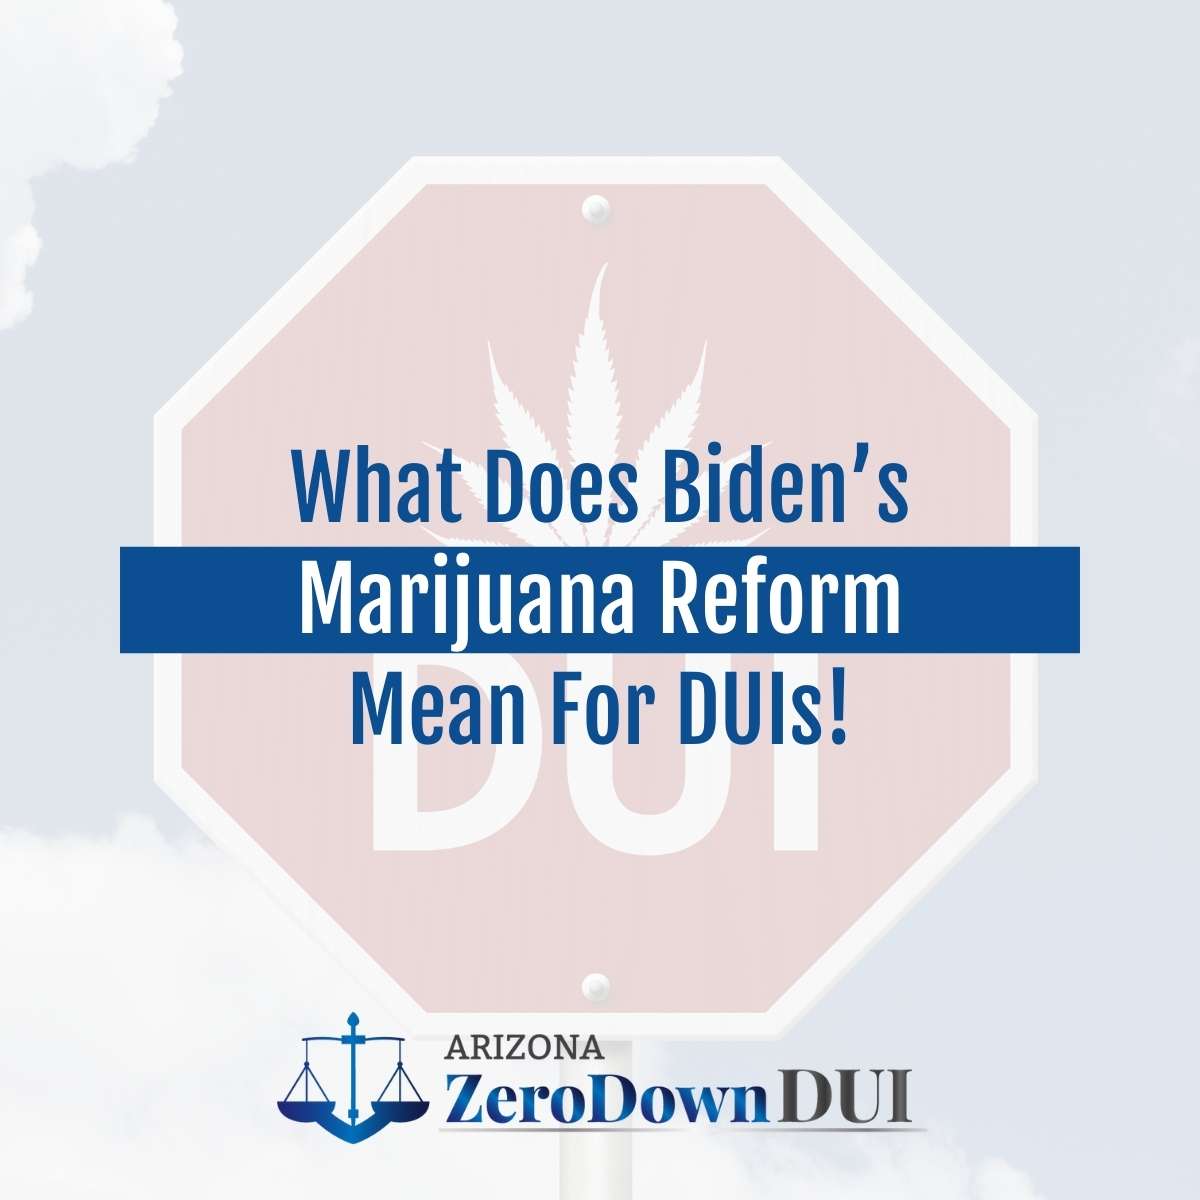 What Does Biden’s Marijuana Reform Mean for DUIs?